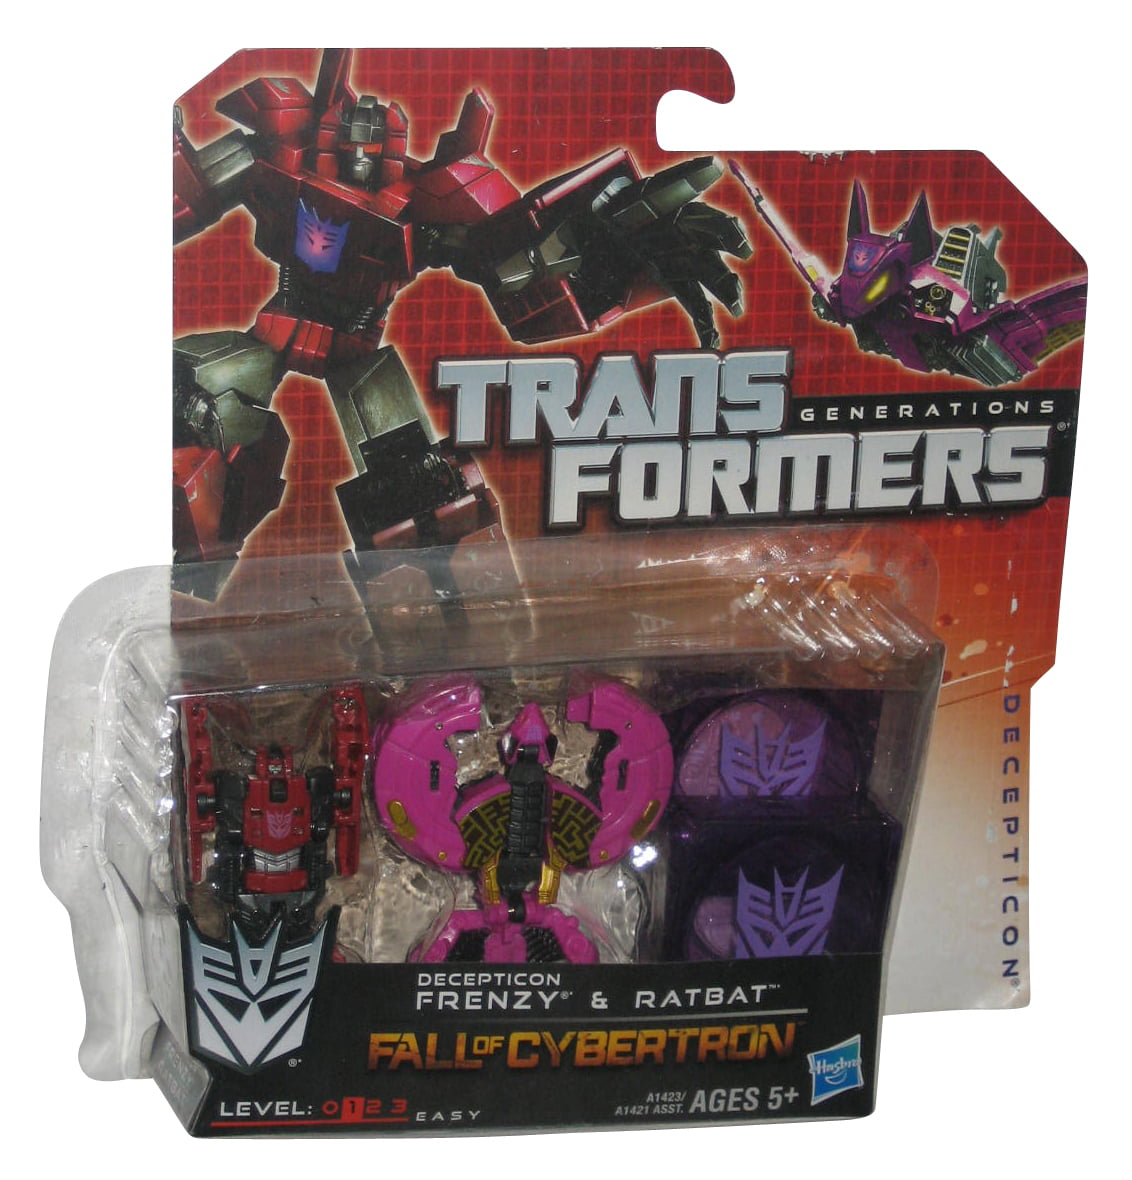 Transformers Generations Fall of Cybertron (2012) Ratbat & Decepticon Frenzy Toy Figure Set